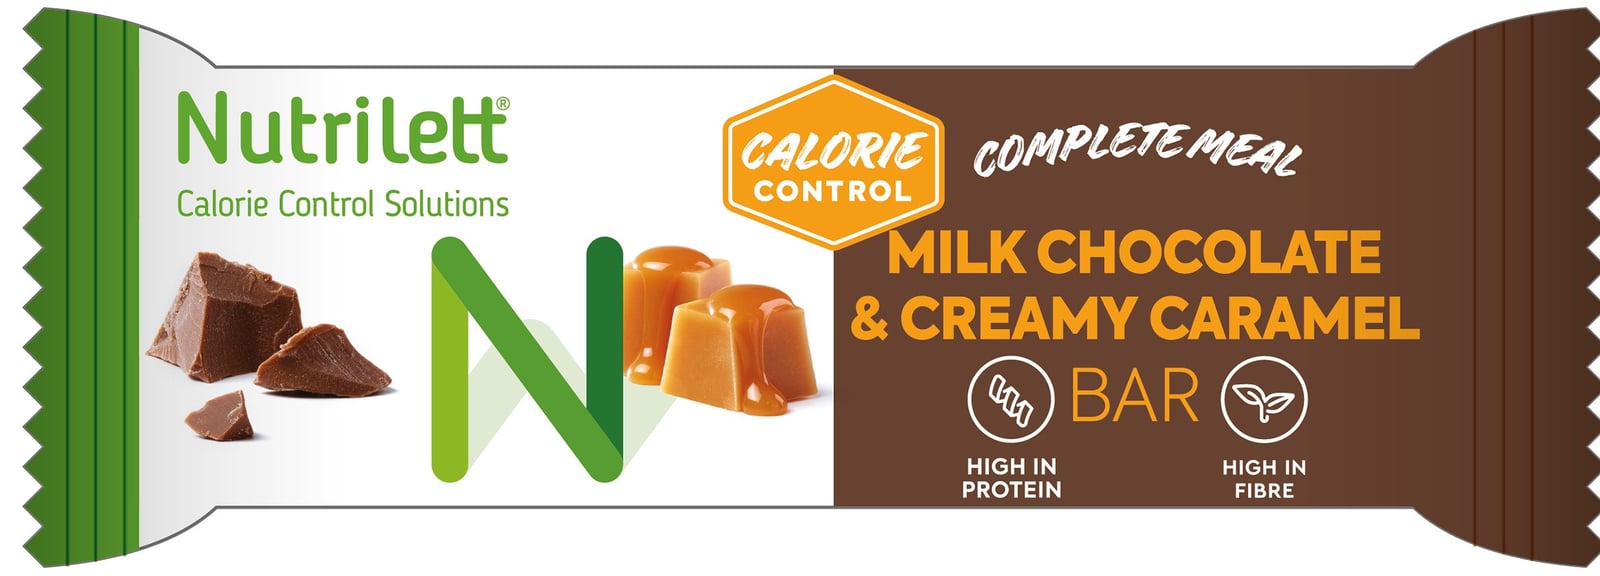 Nutrilett Bar Milk Chocolate & Creamy Caramel